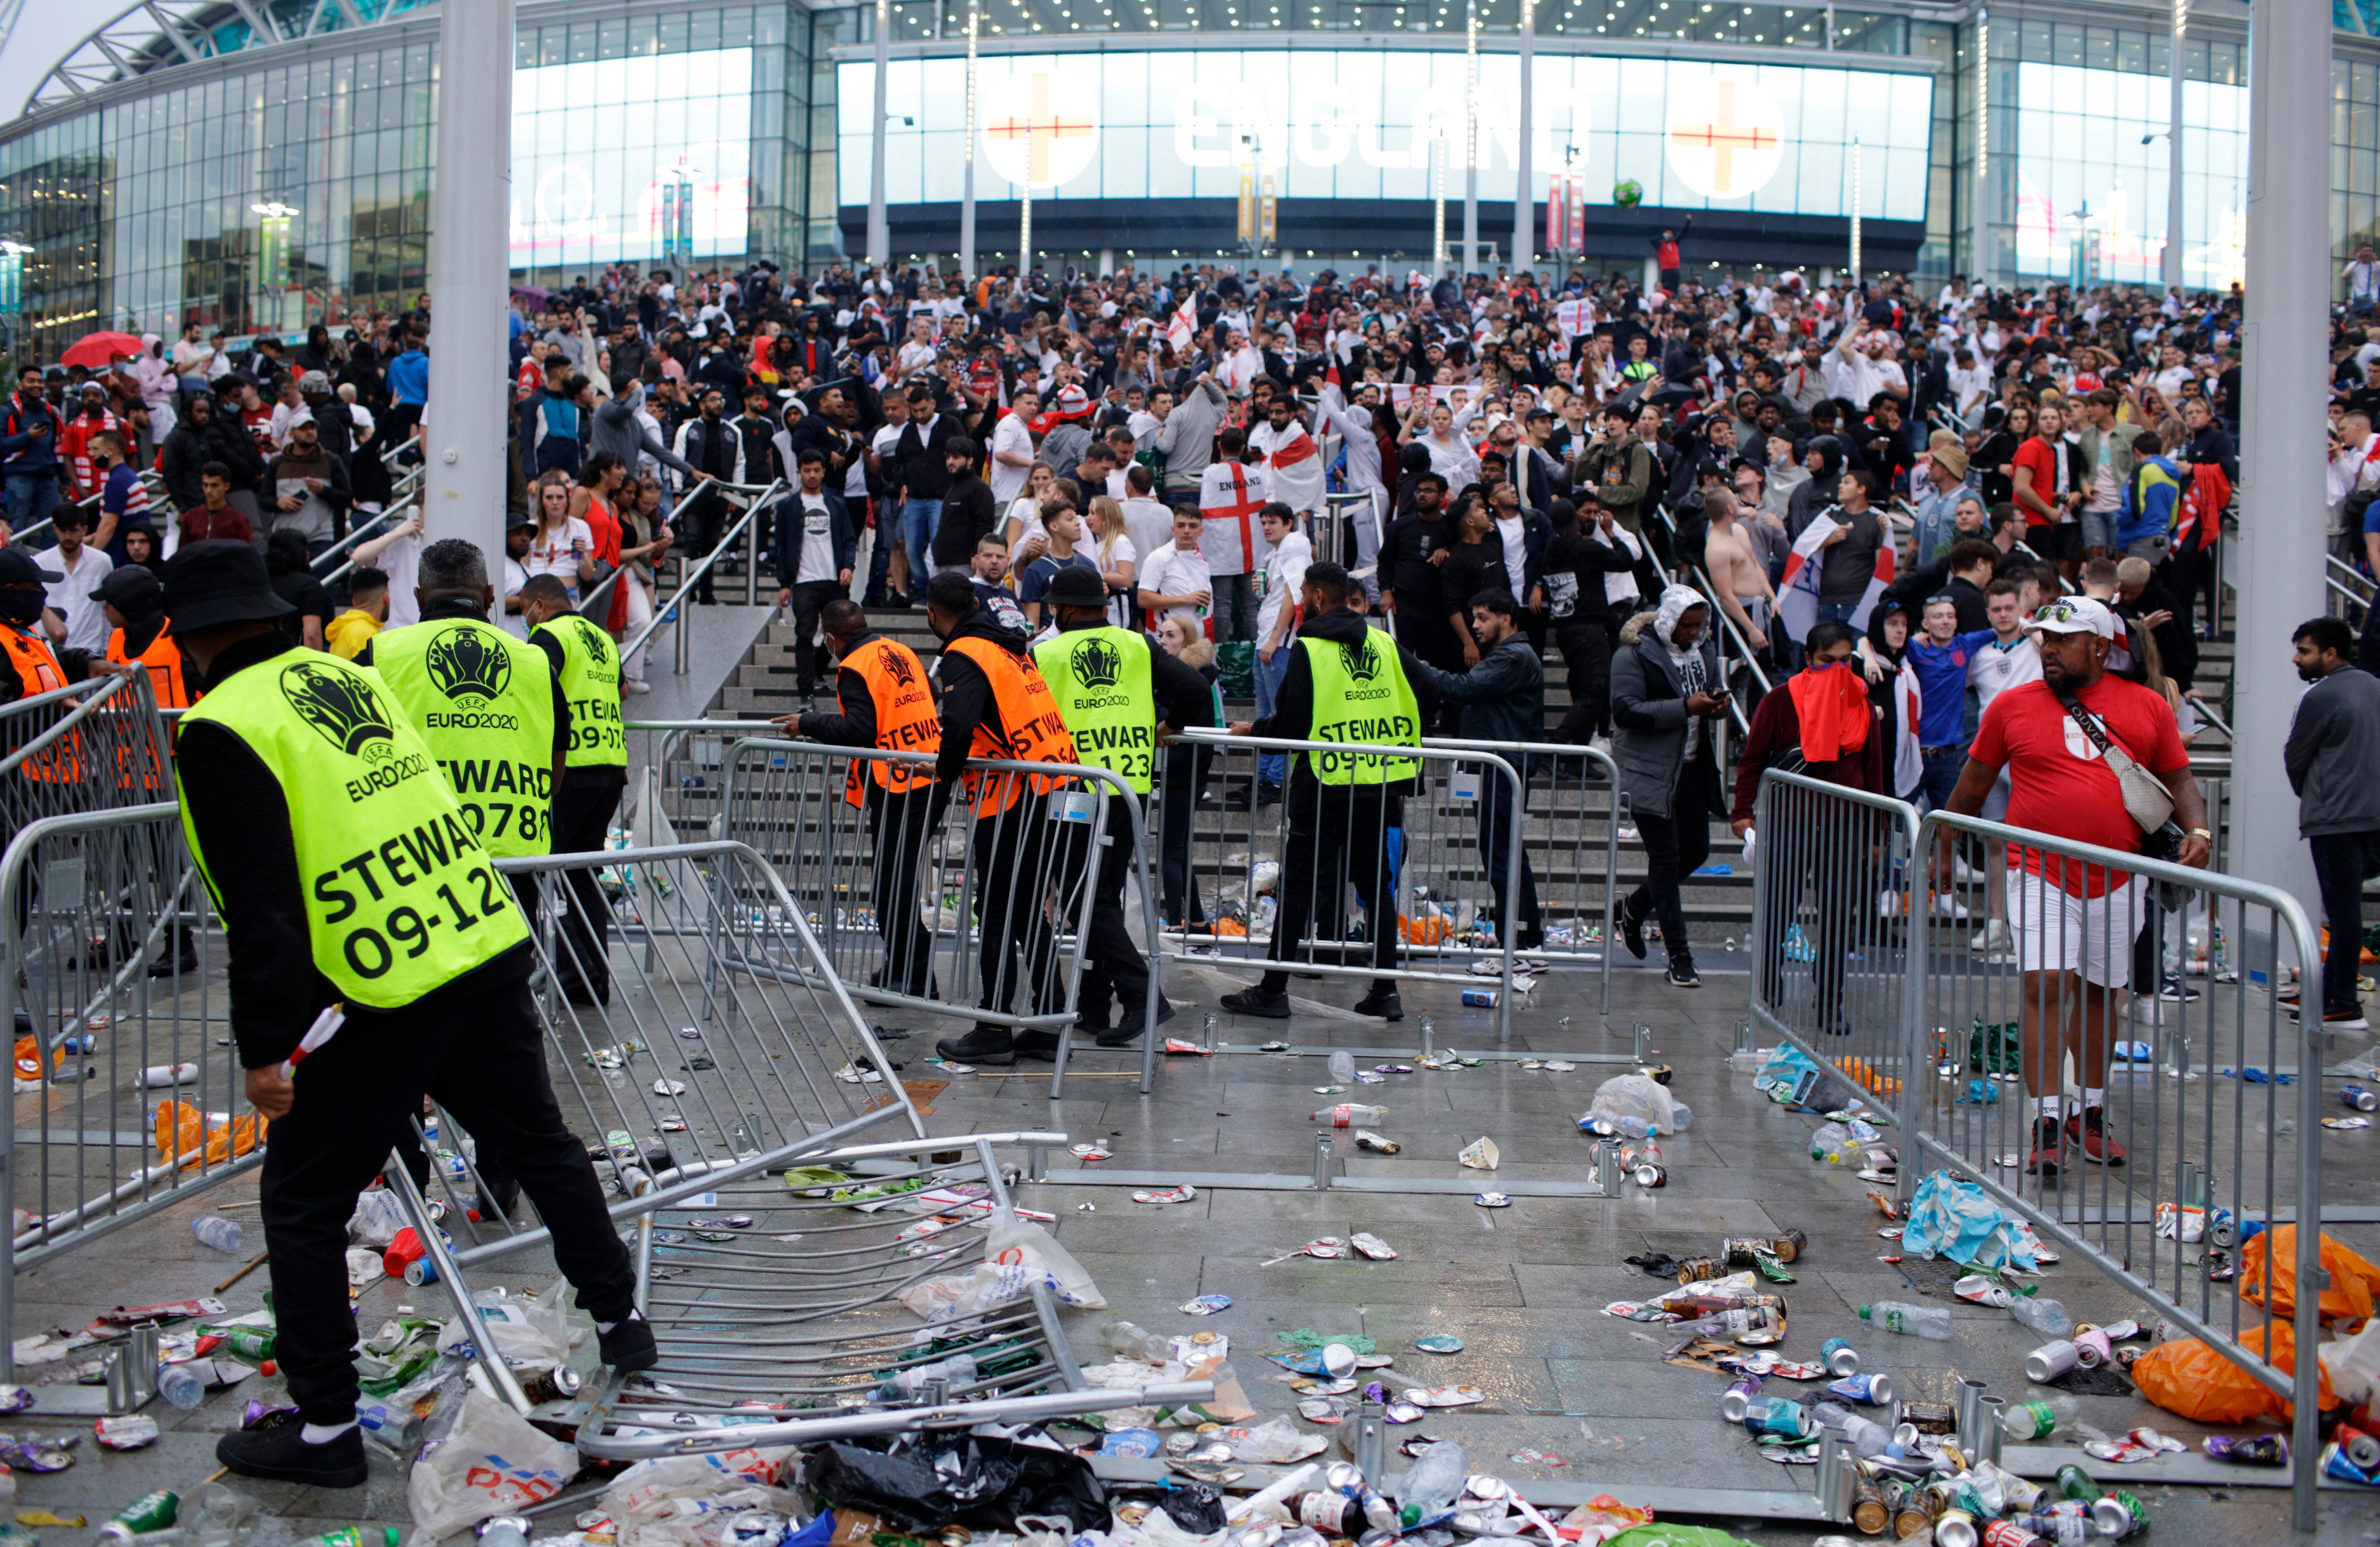 Euro 2020 Wembley Unrest Investigation